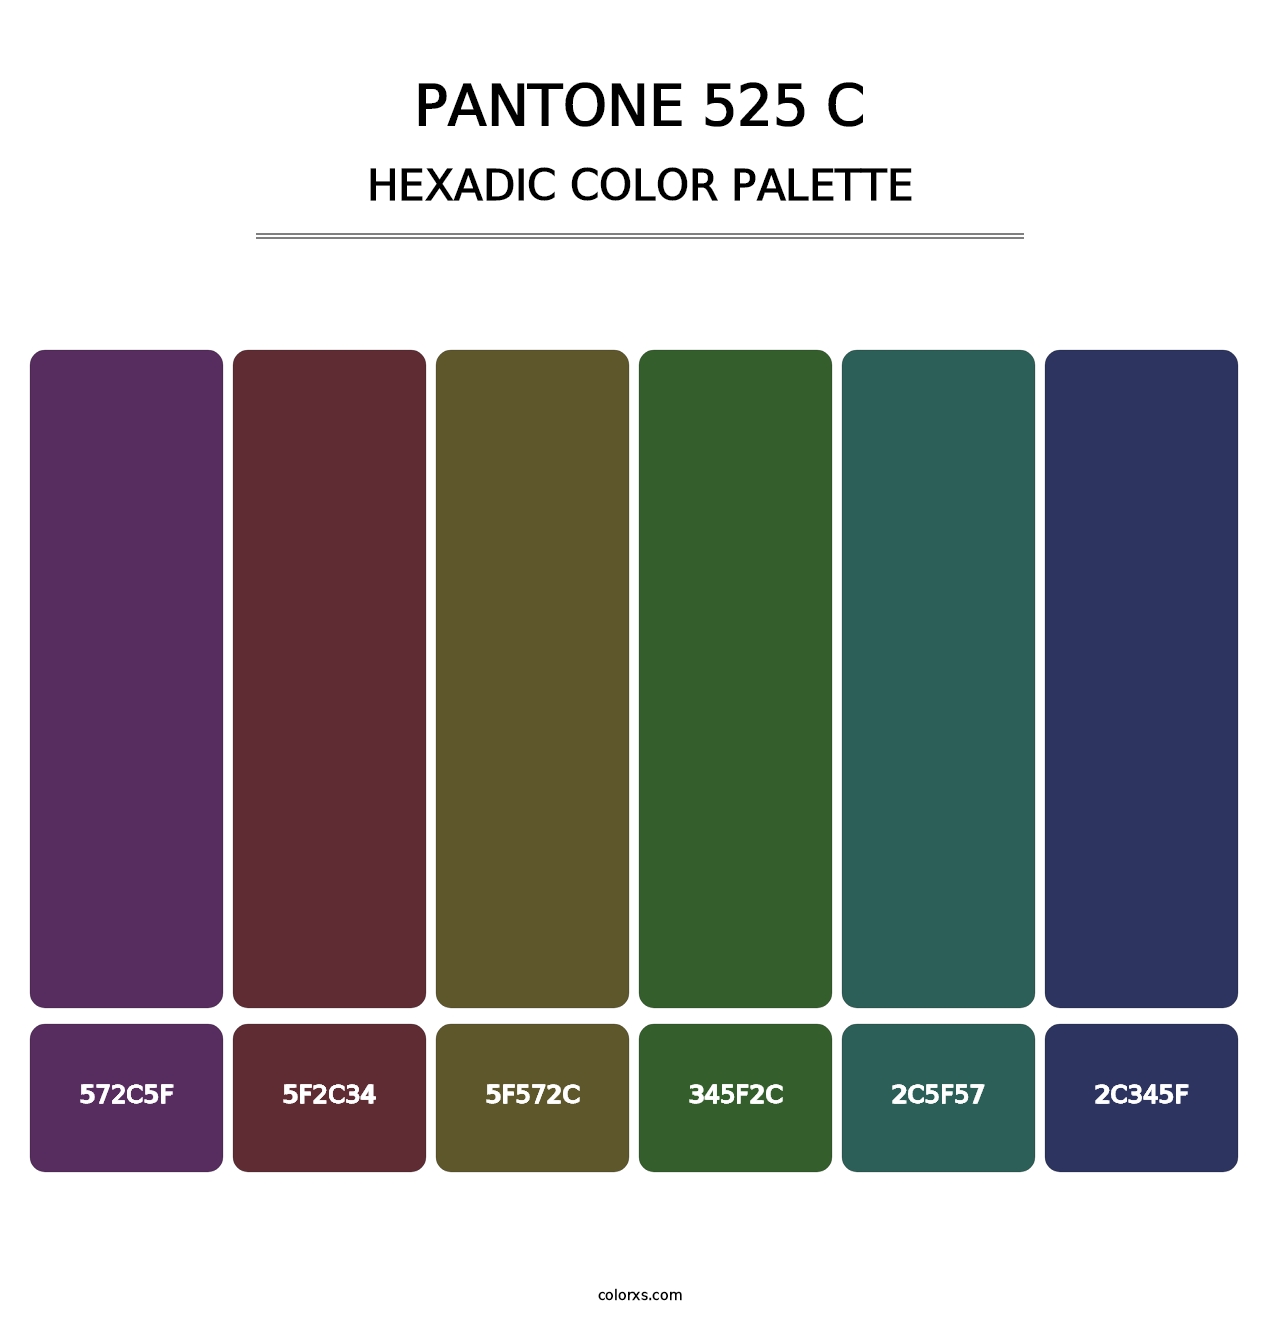 PANTONE 525 C - Hexadic Color Palette